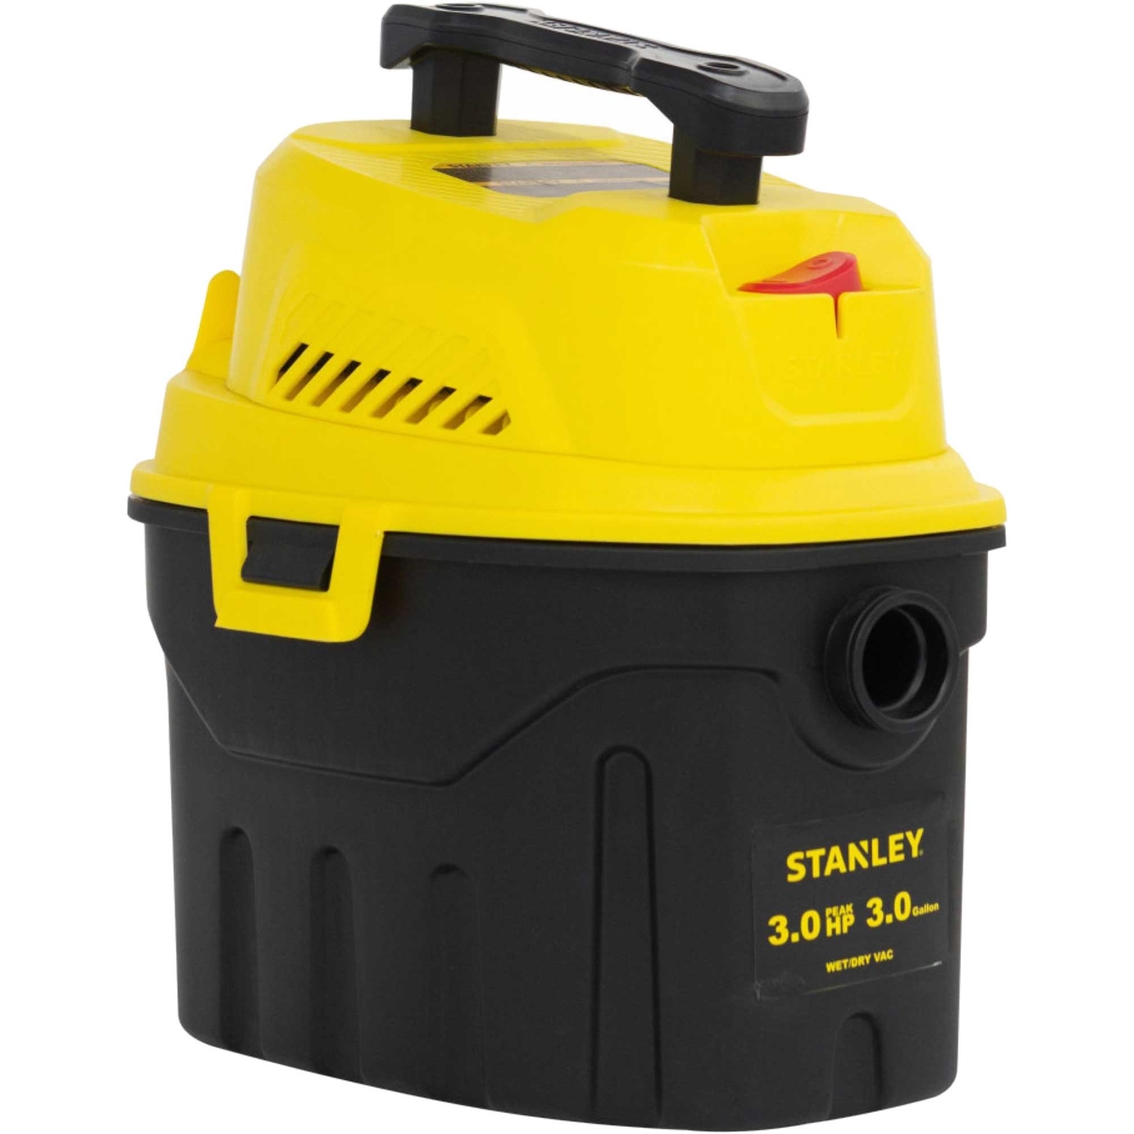 Stanley 3 gal. 3 Horsepower Portable Wet/Dry Vacuum - Image 2 of 4